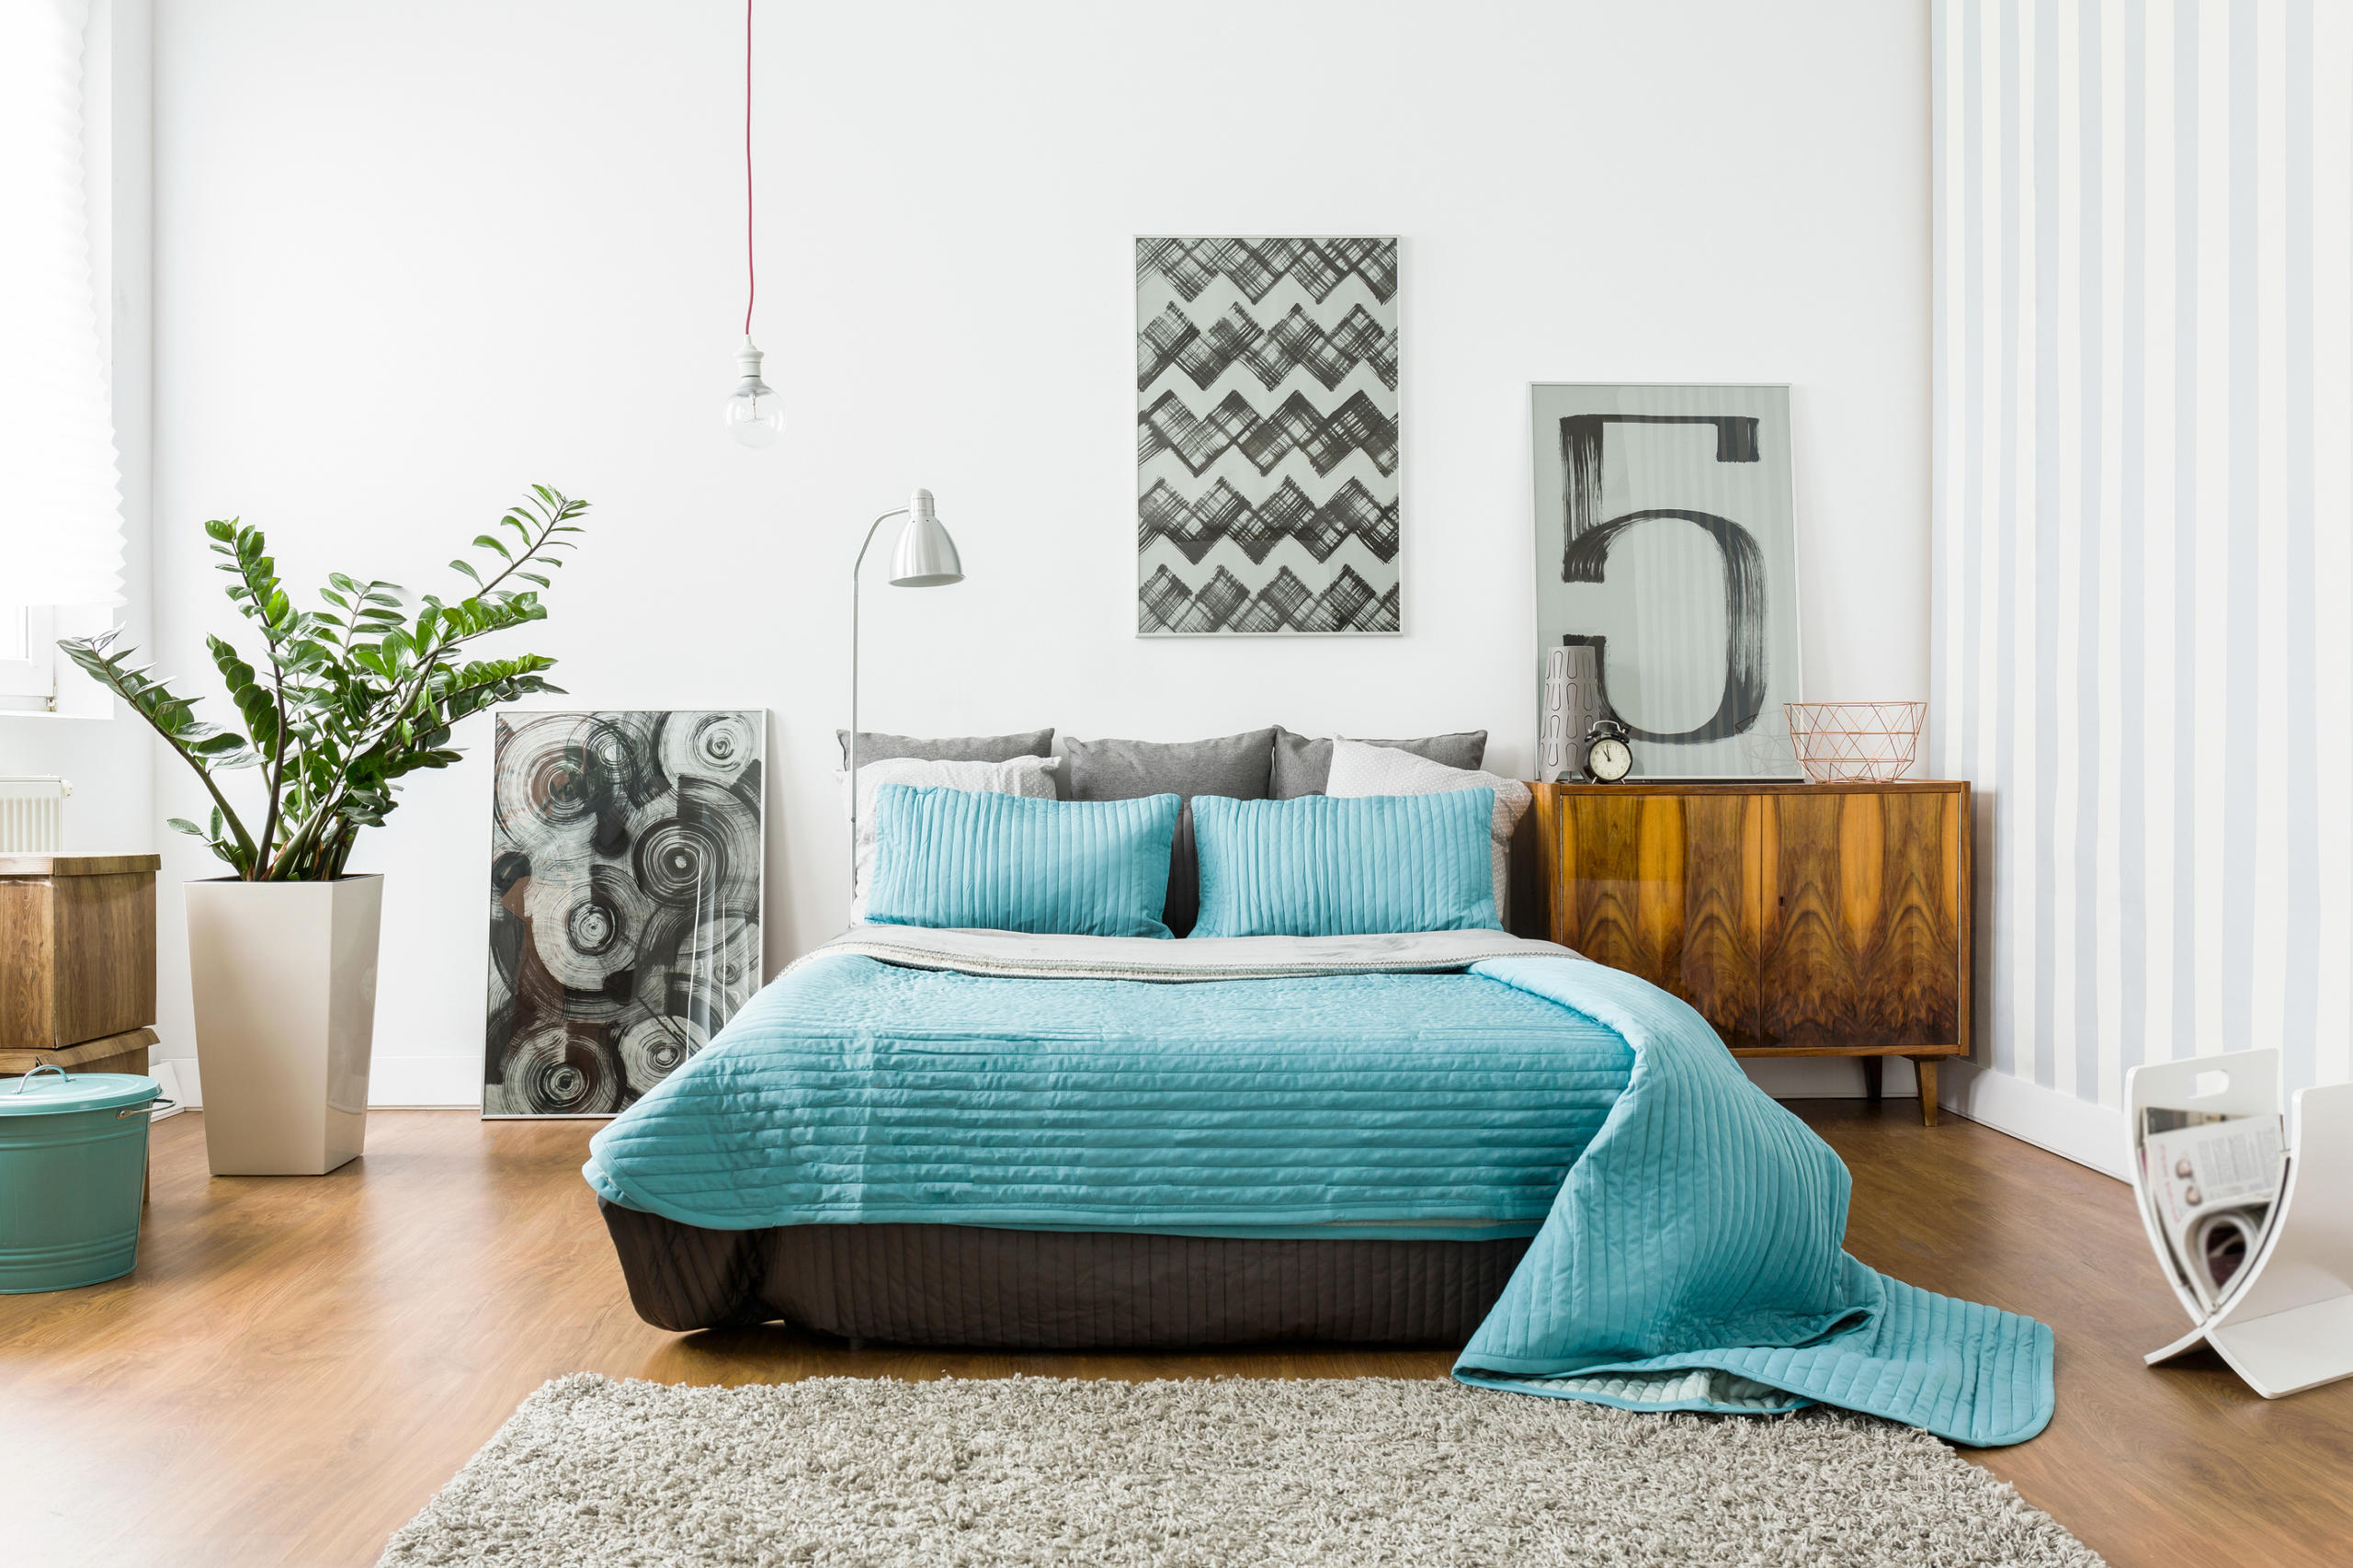 Heating Plus - Hydronic Heating Cozy Bedroom In Modern Design